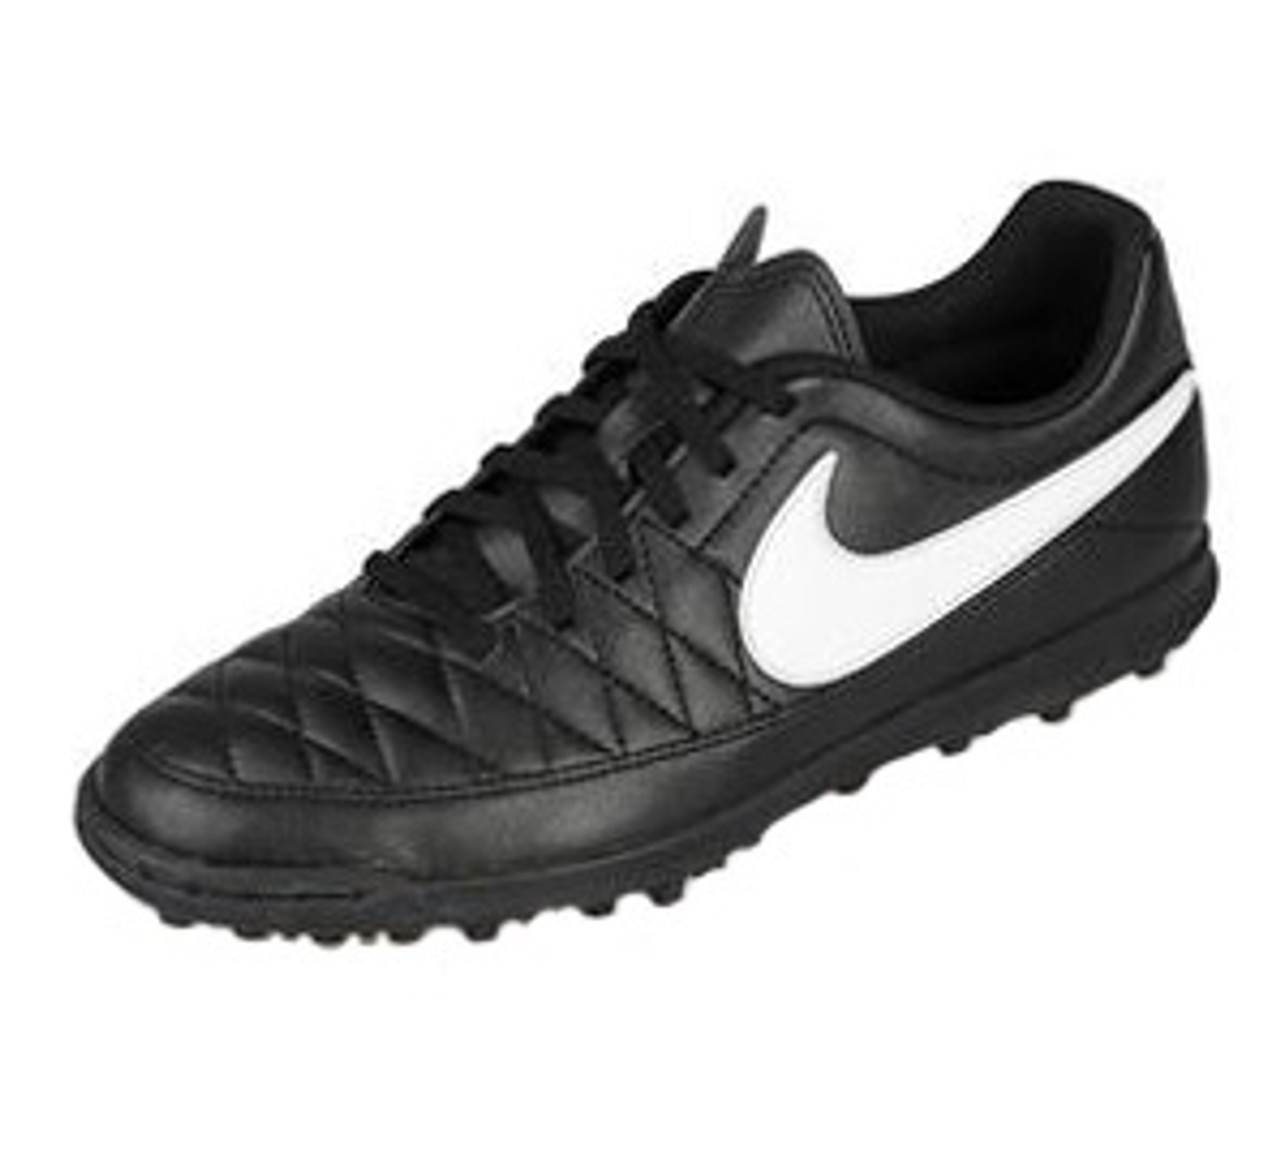 Nike Majestry TF - Black/White/Volt SD (061120) - ohp soccer